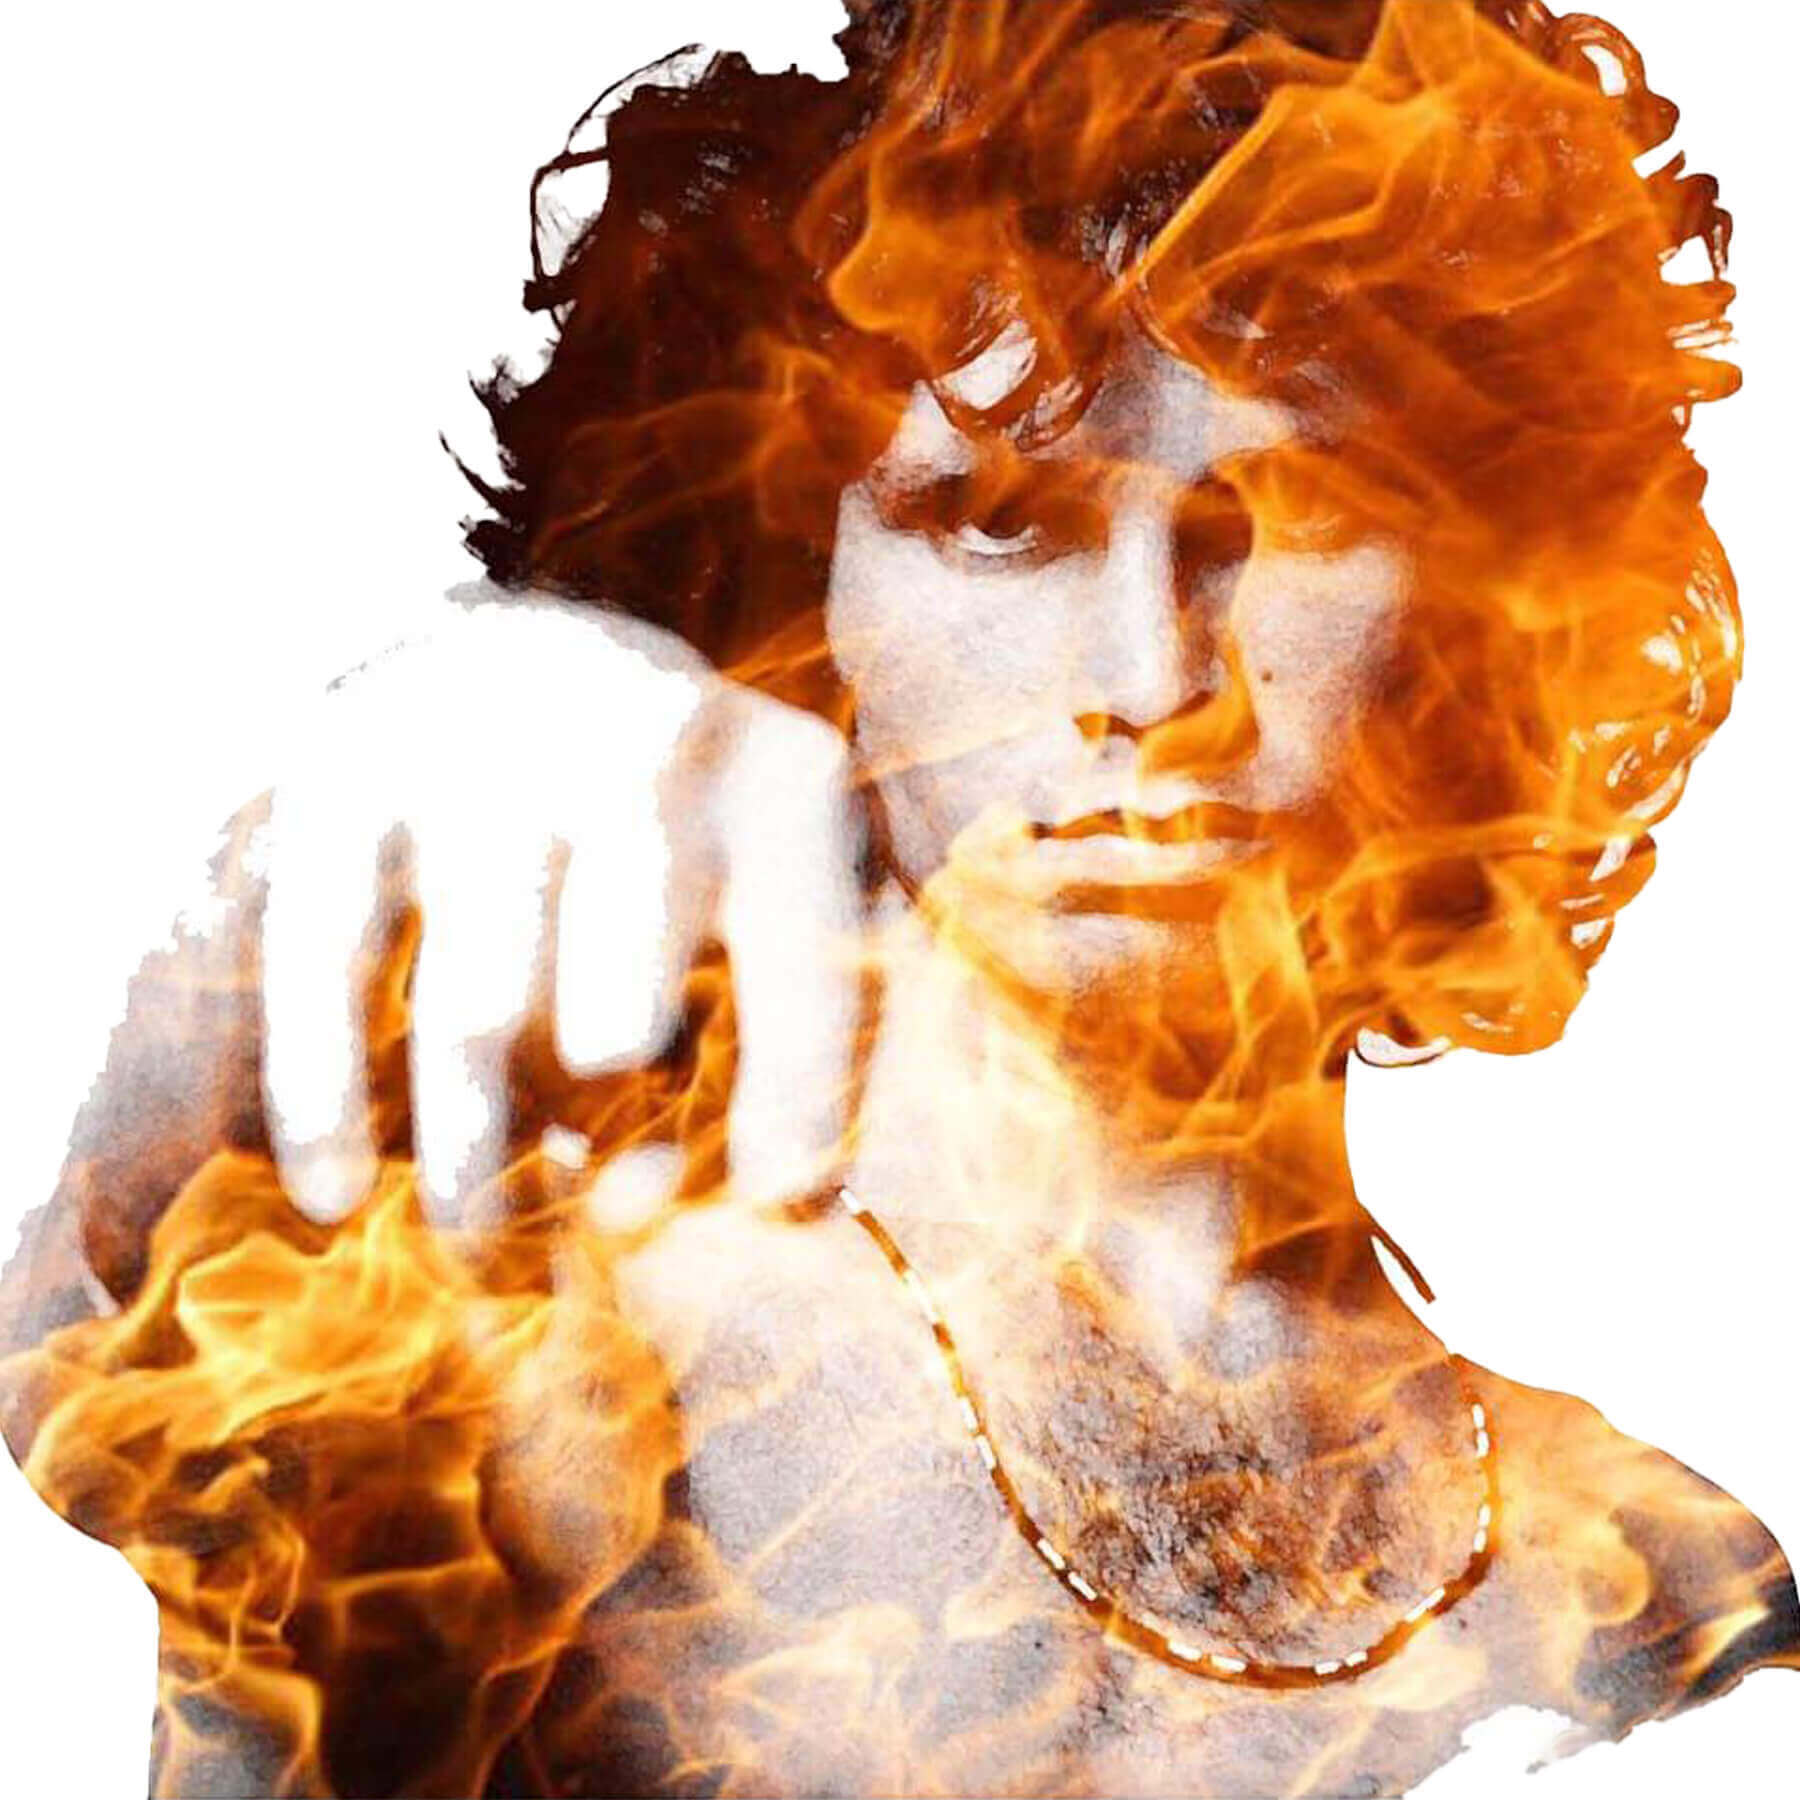 Jim Morrison Abstract